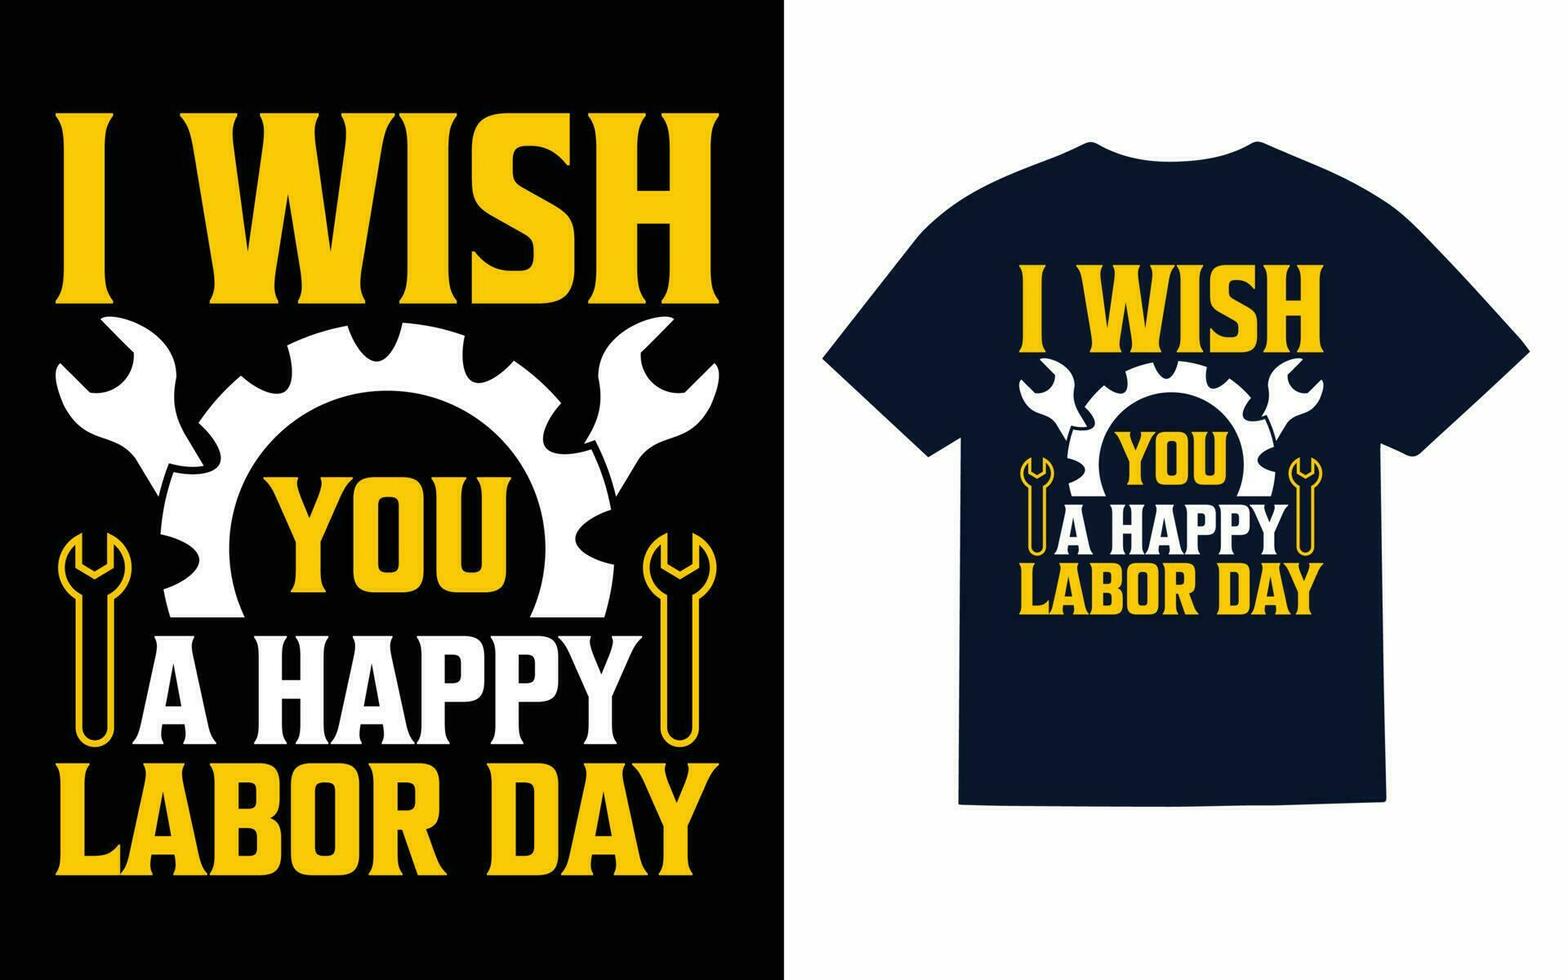 Labor day t shirt design vector